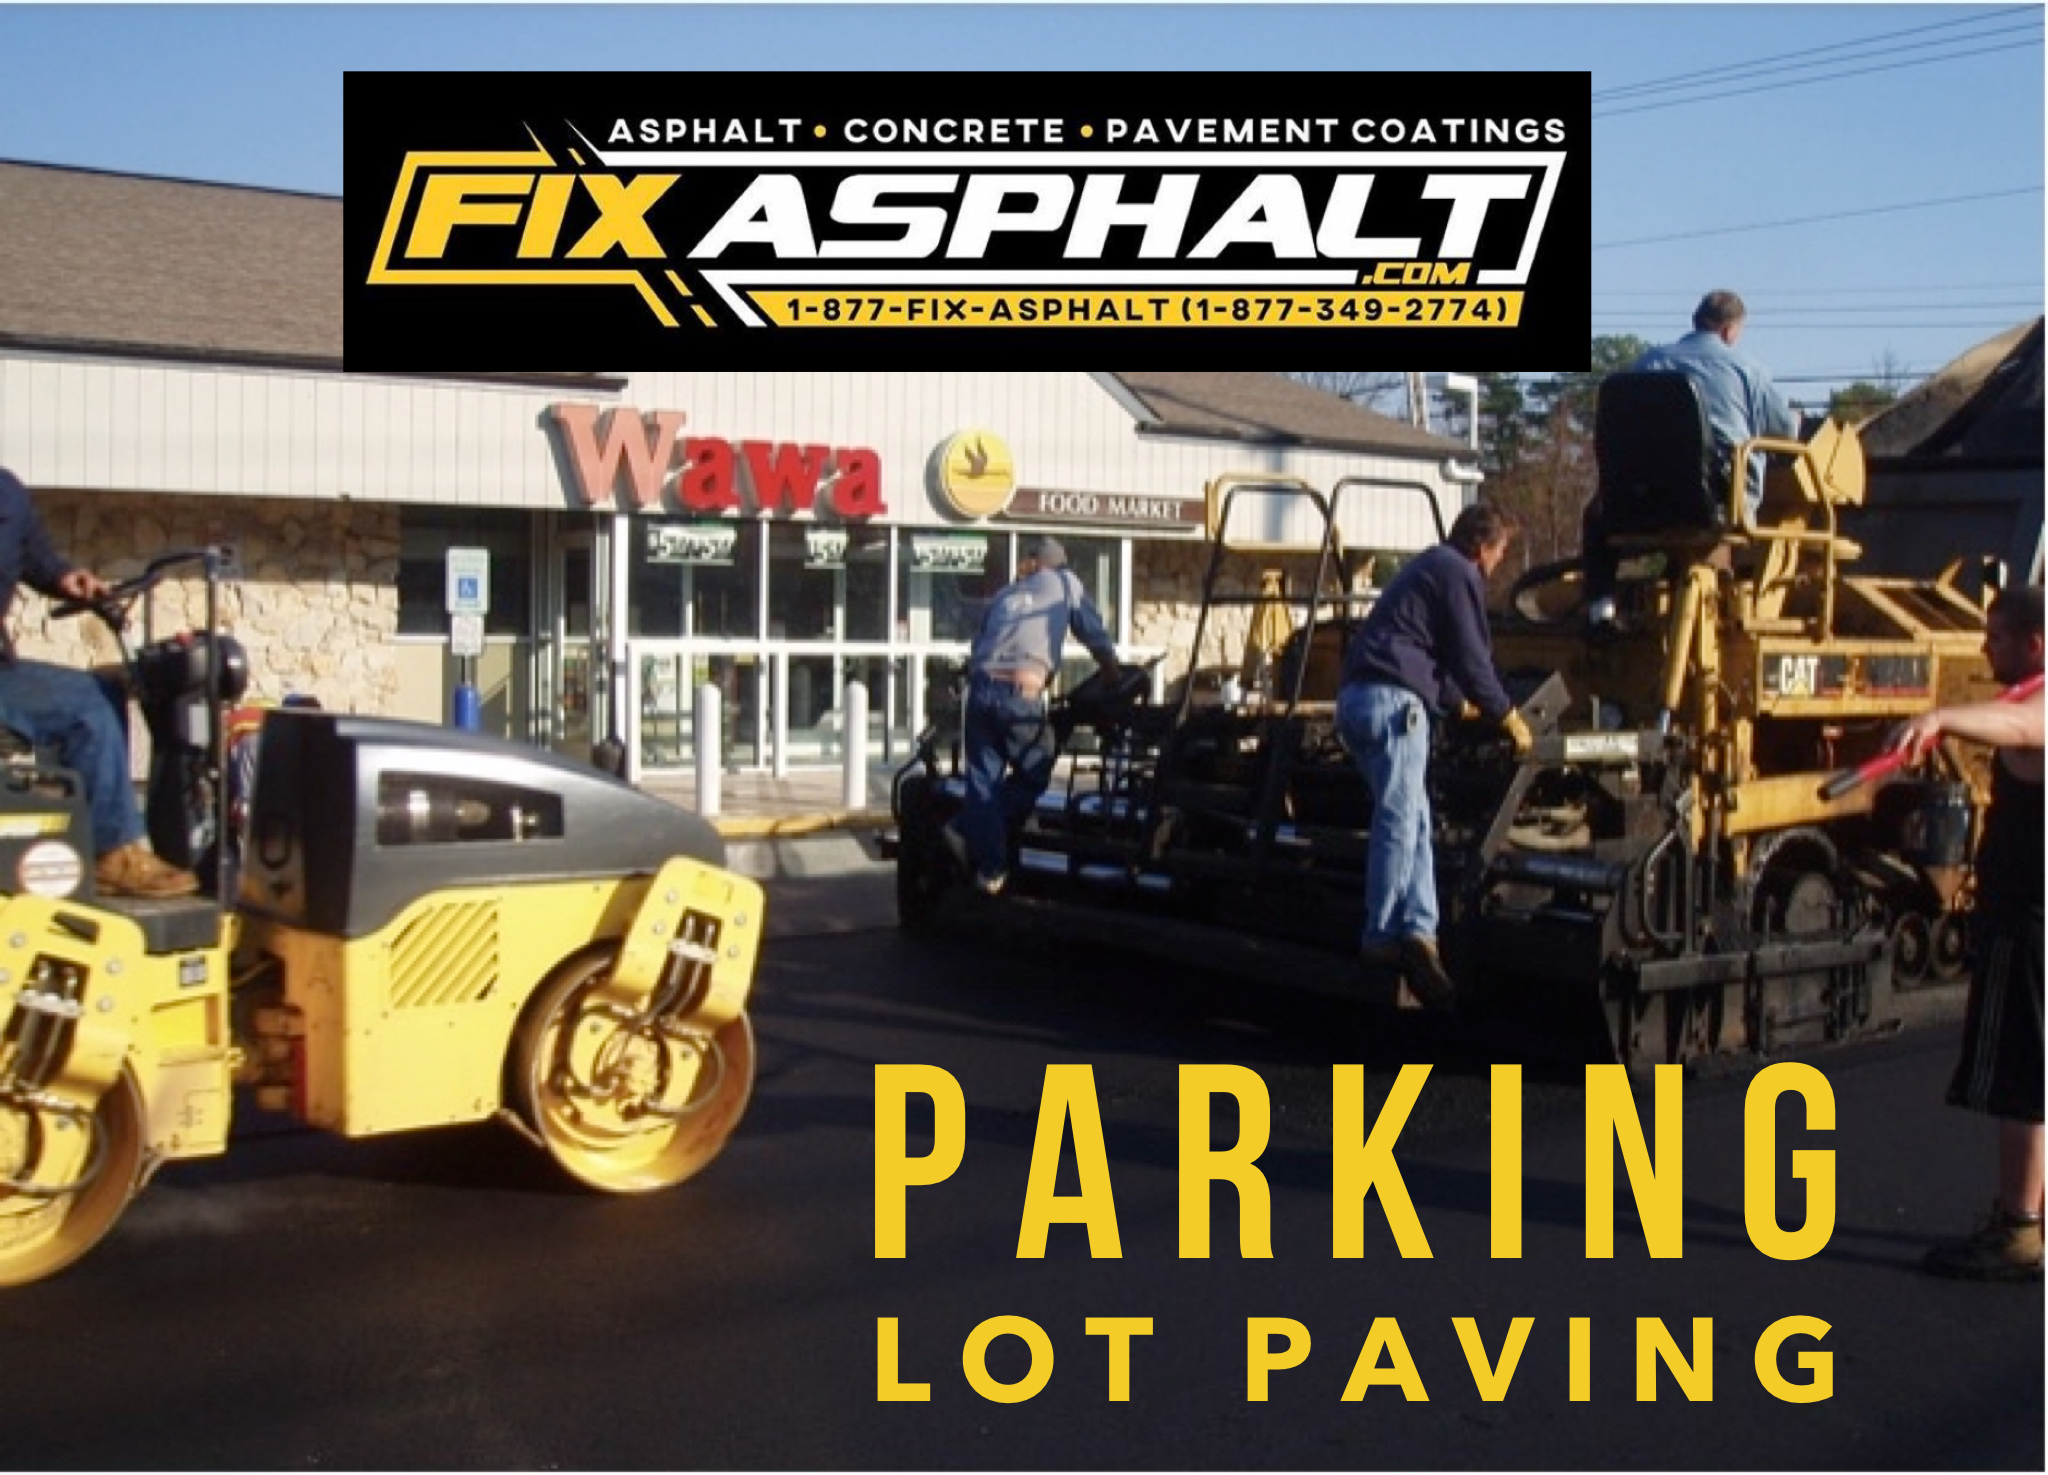 NJ Parking Lot Paving Company